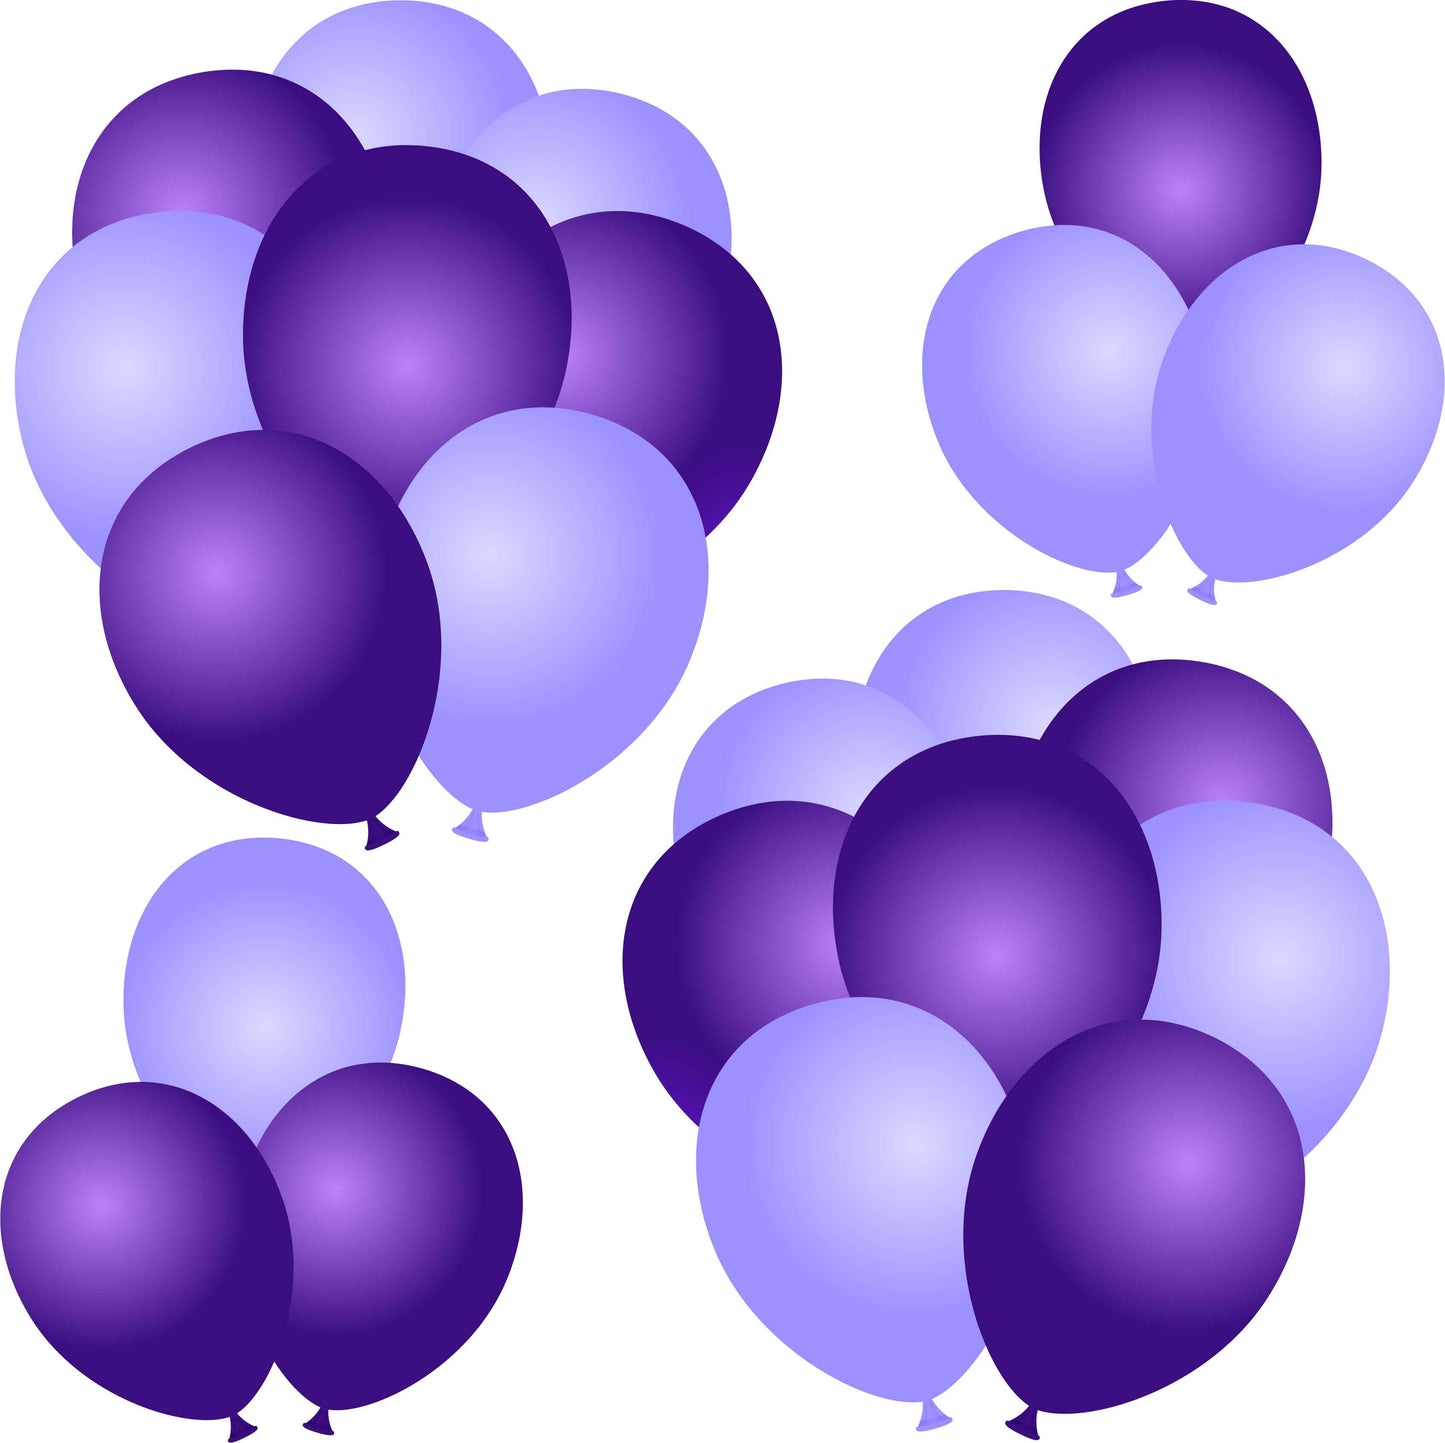 Solid Dark and Light Purple Balloons Half Sheet Misc.